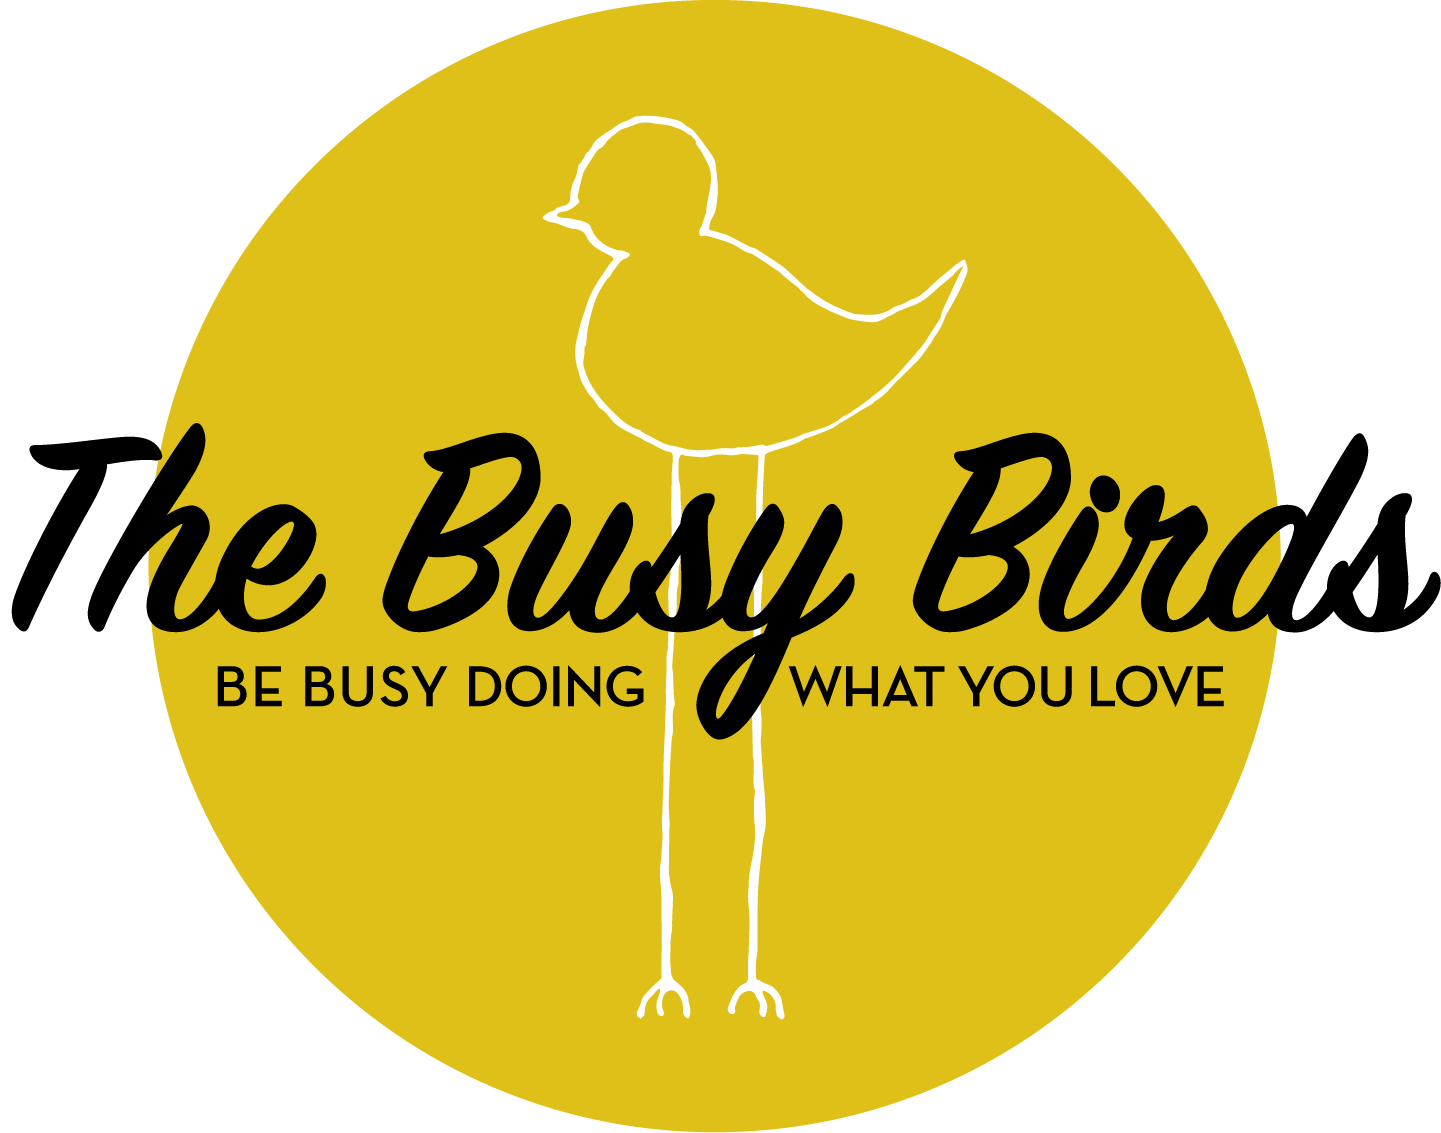 The Busy Birds